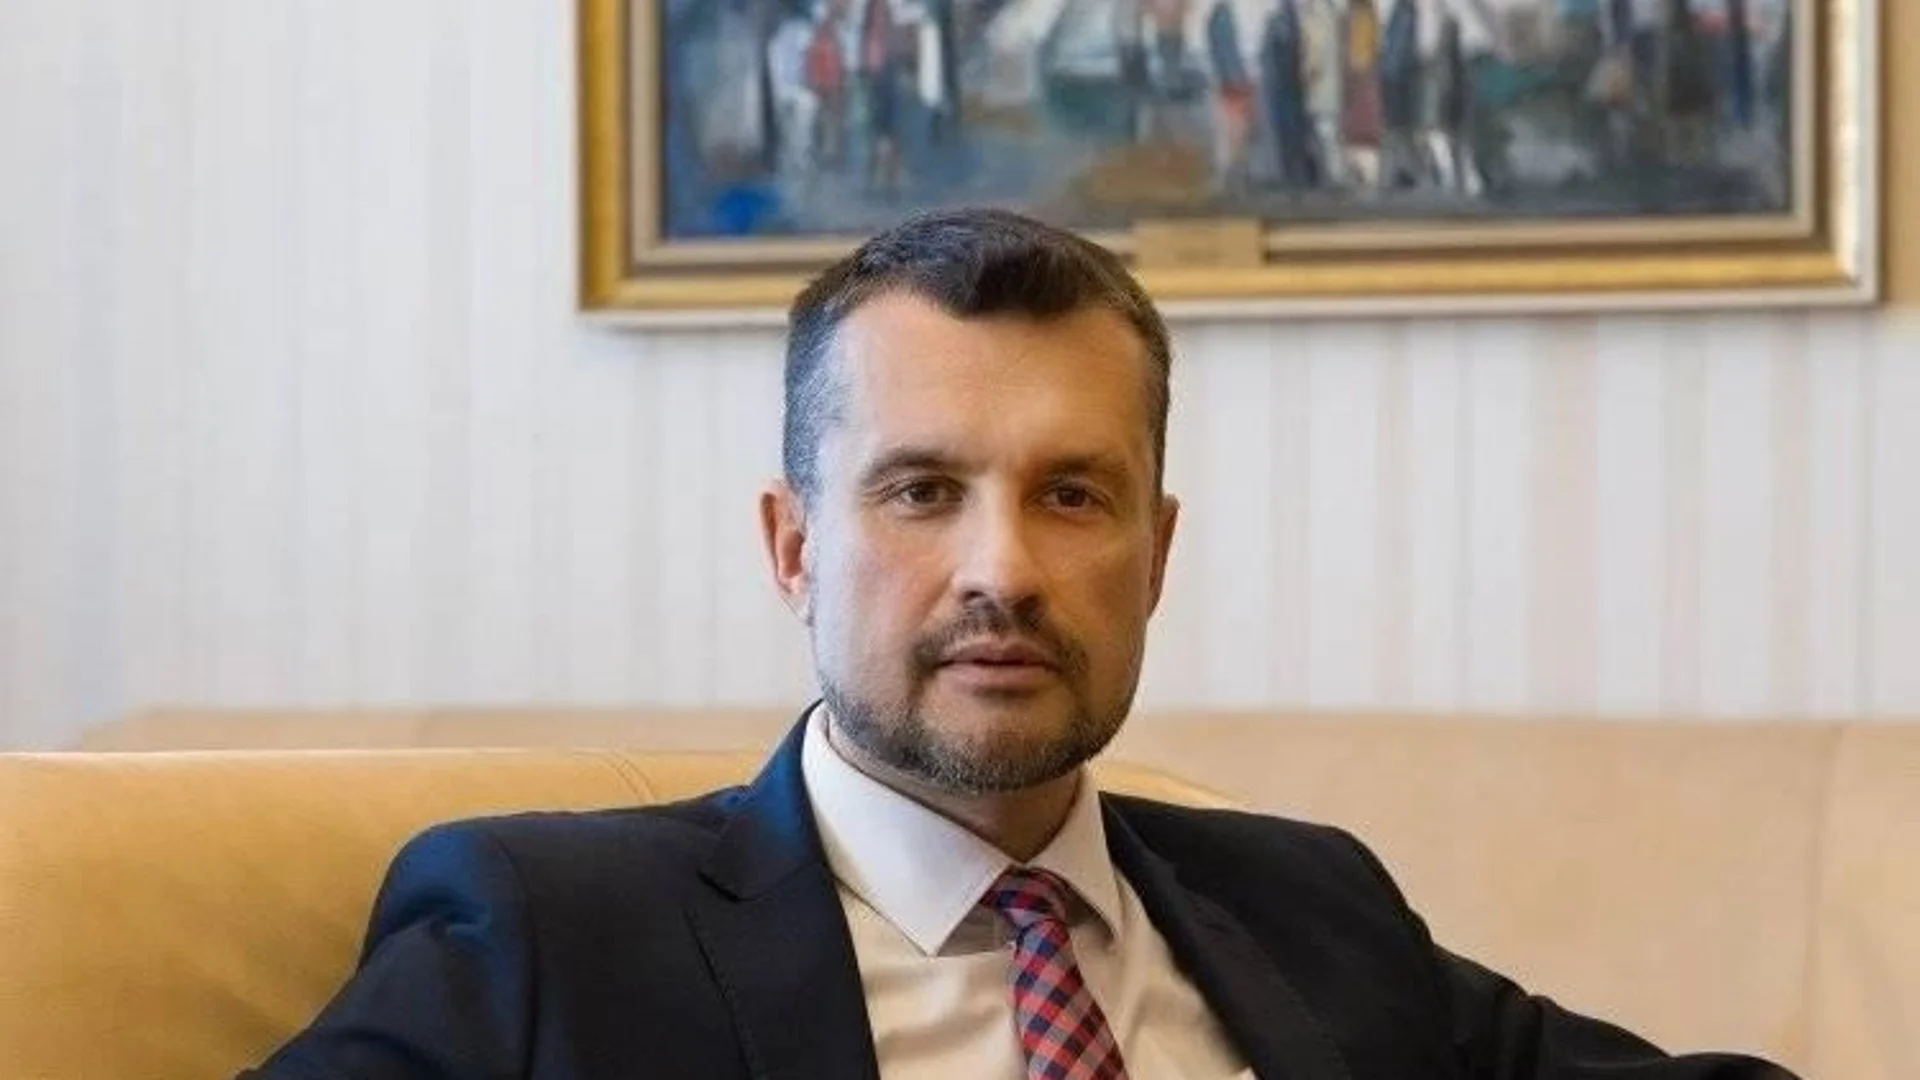 Калоян Методиев: Радев и Борисов се договориха за контролирана игра на управляващ и опозиция